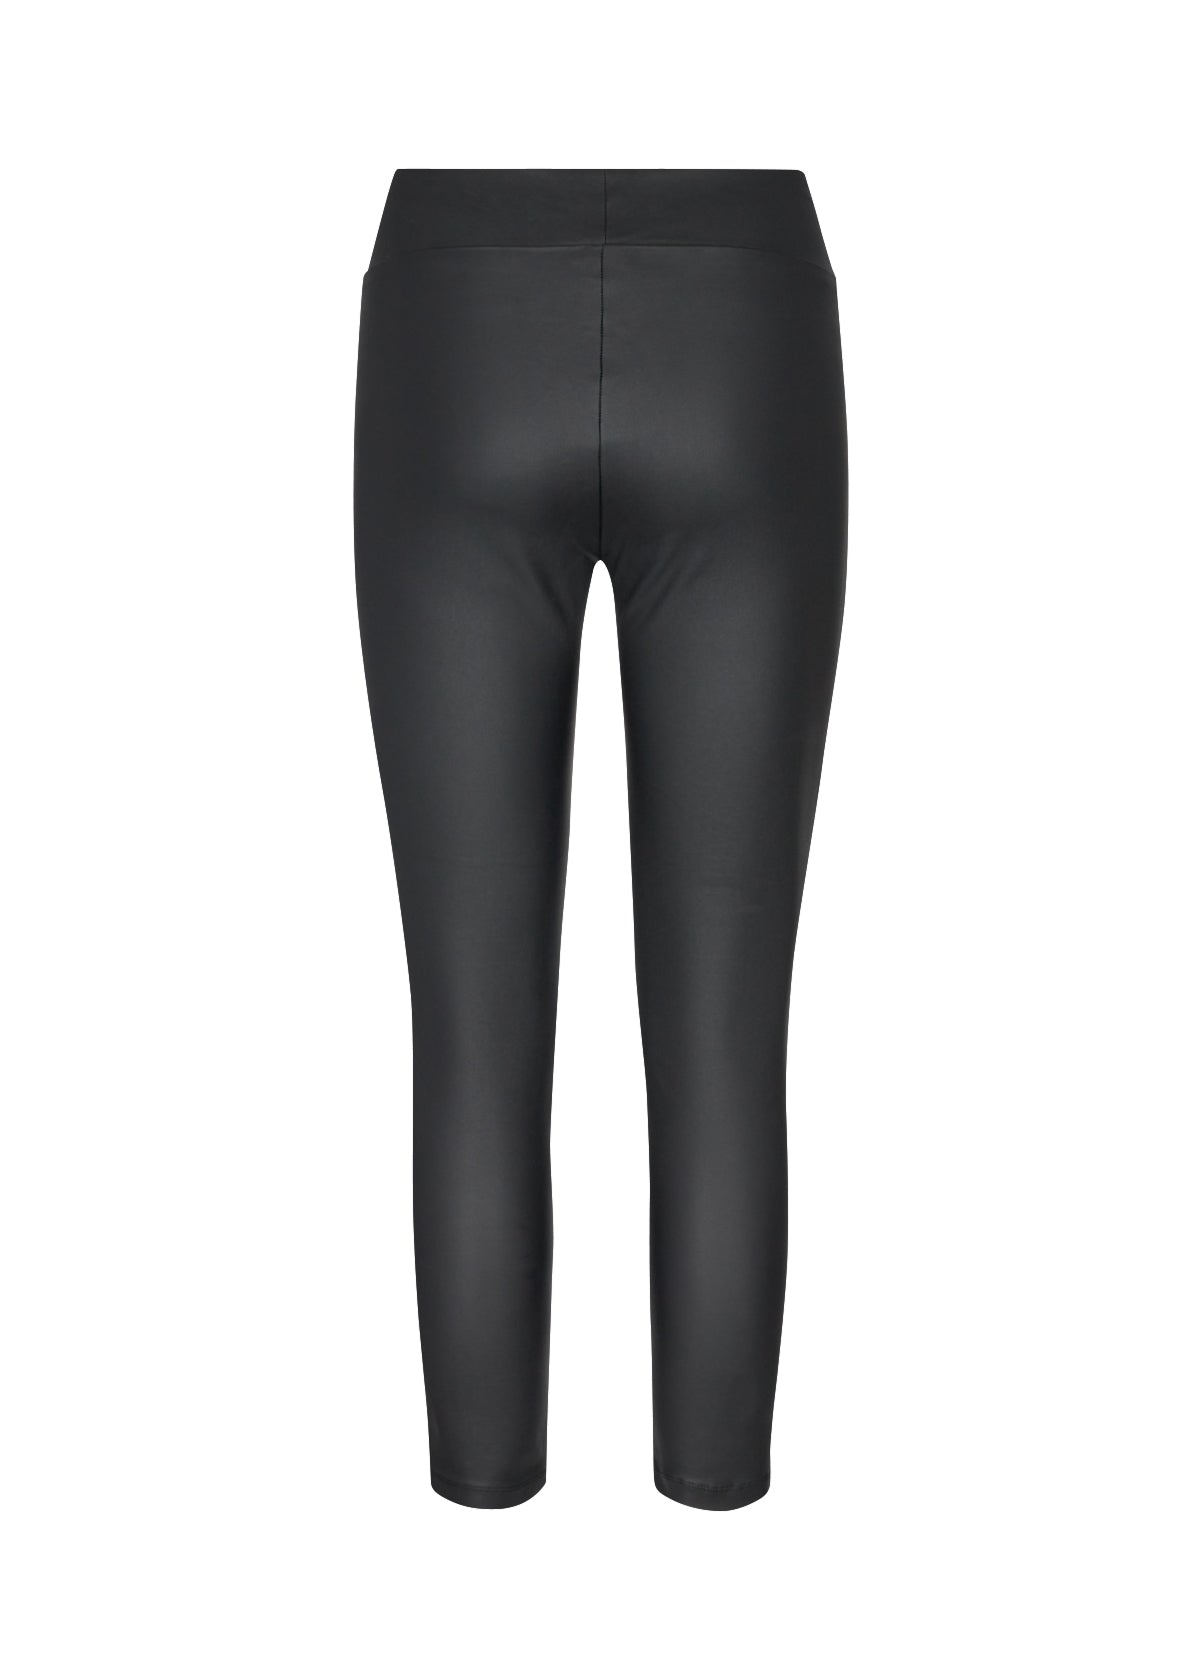 Soya Concept Pam 2 Leather Look Leggings (Black)